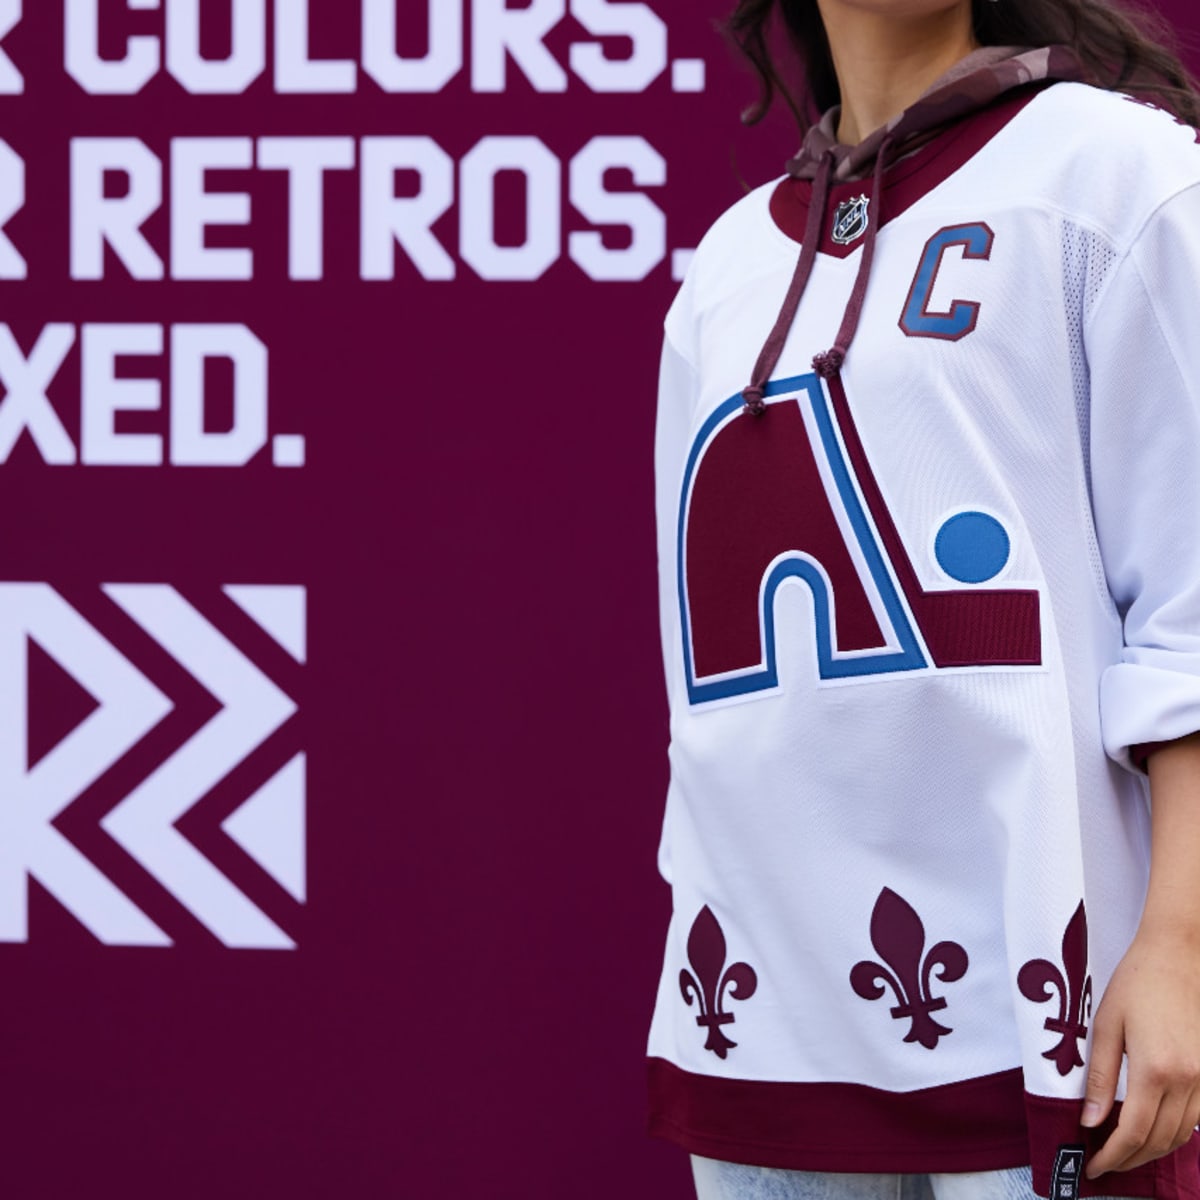 NHL, Adidas reveal 'Reverse Retro' alternate jerseys for all 31